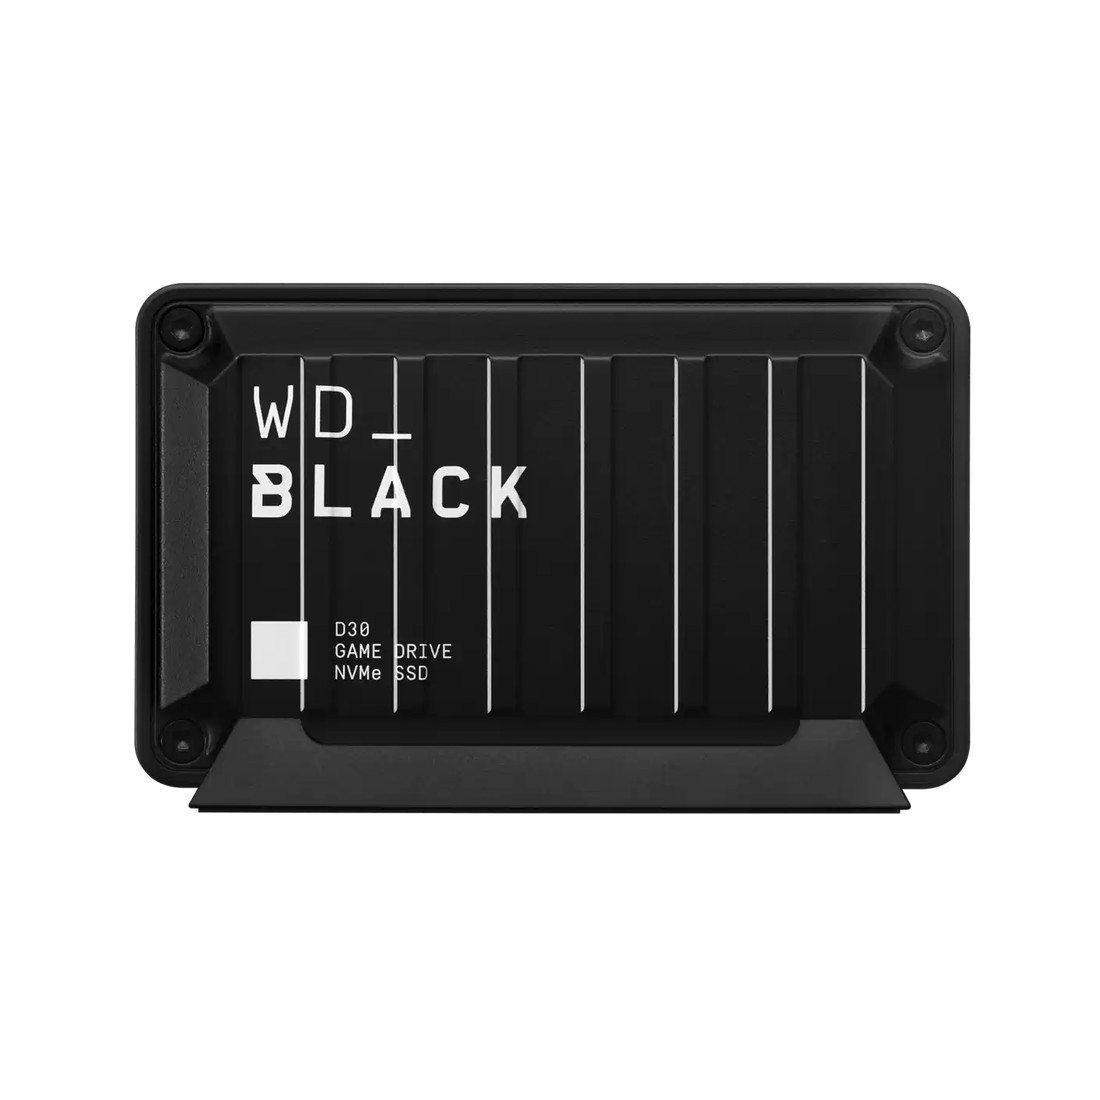 WD Black D30 Game Drive 500GB External SSD